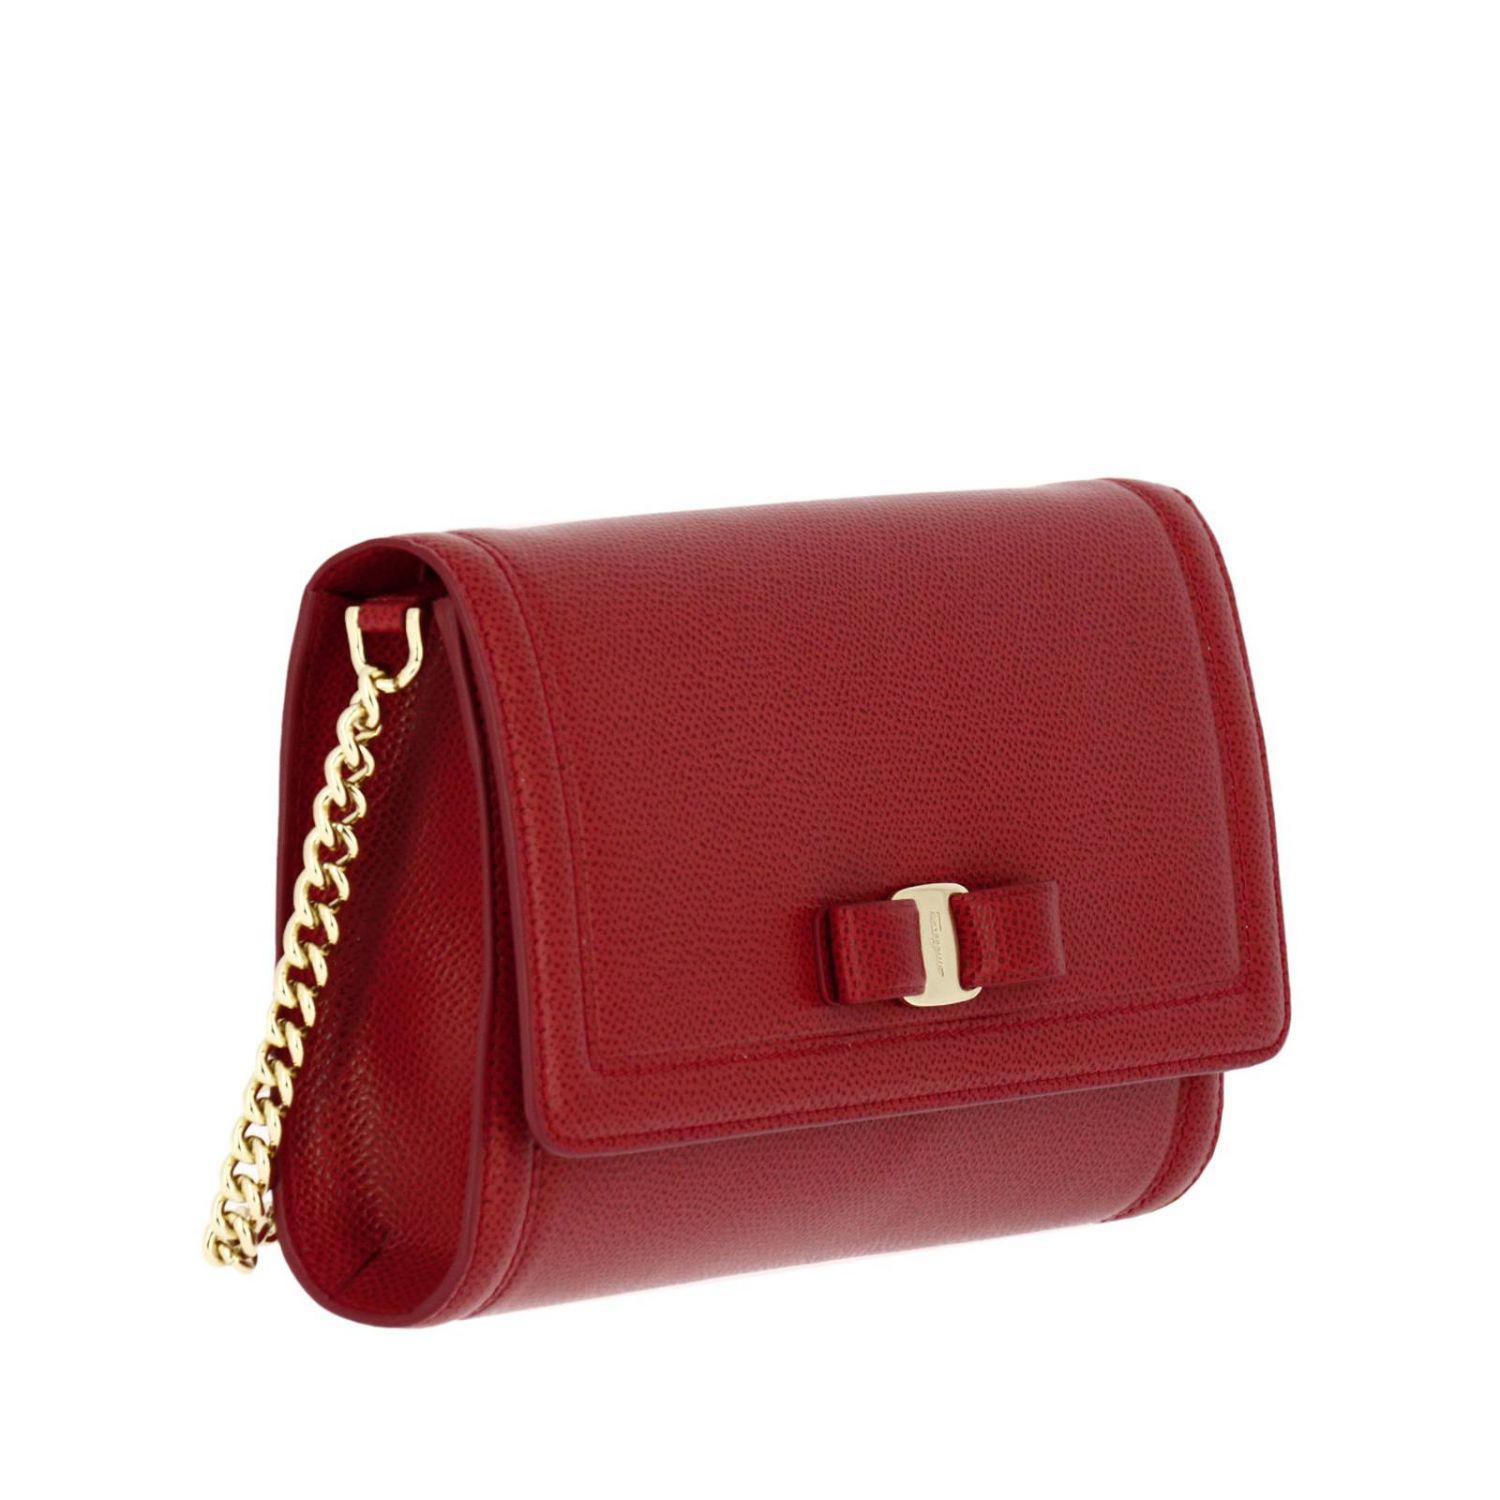 Lyst - Ferragamo Mini Bag Women in Red